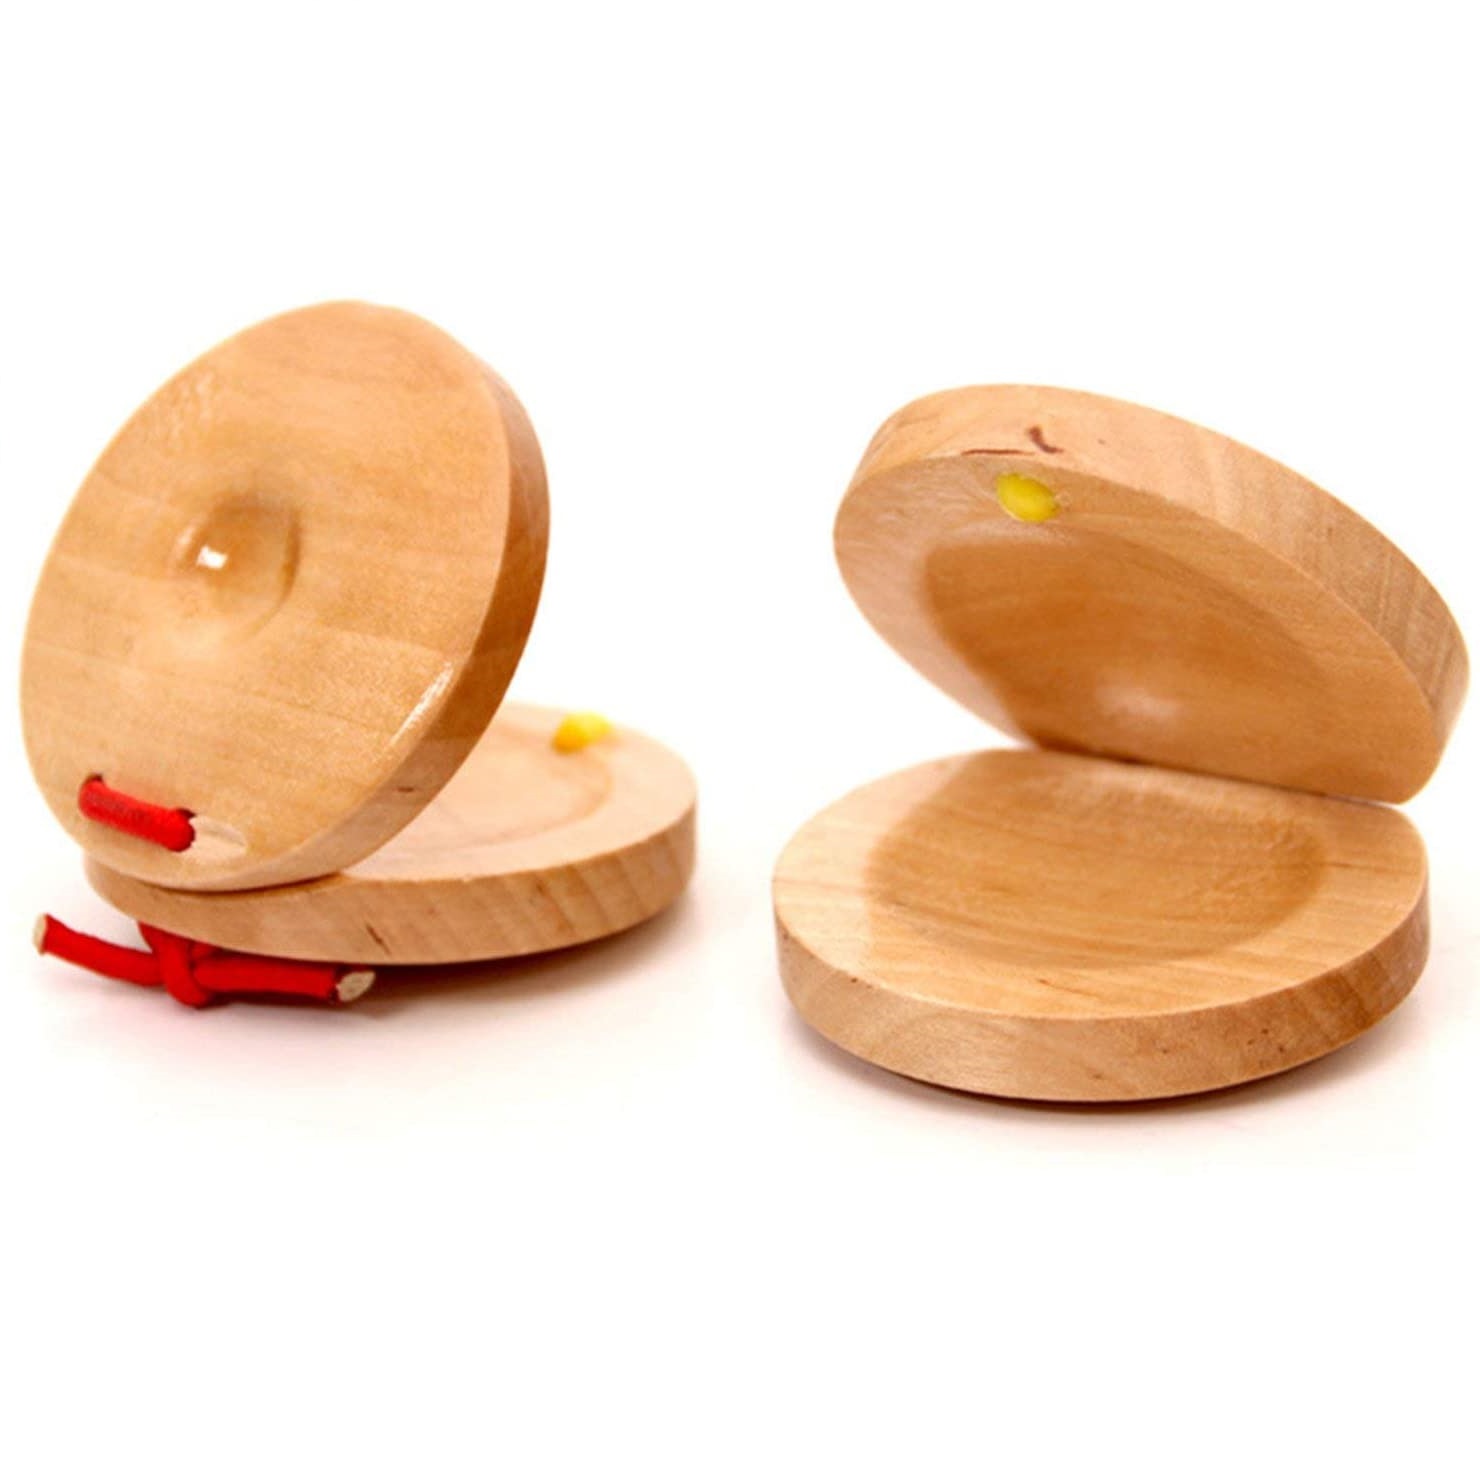 Children's Musical Castanets, Set of 2 Wooden Children's Castanets, Rhythm Instruments, PM-DP145